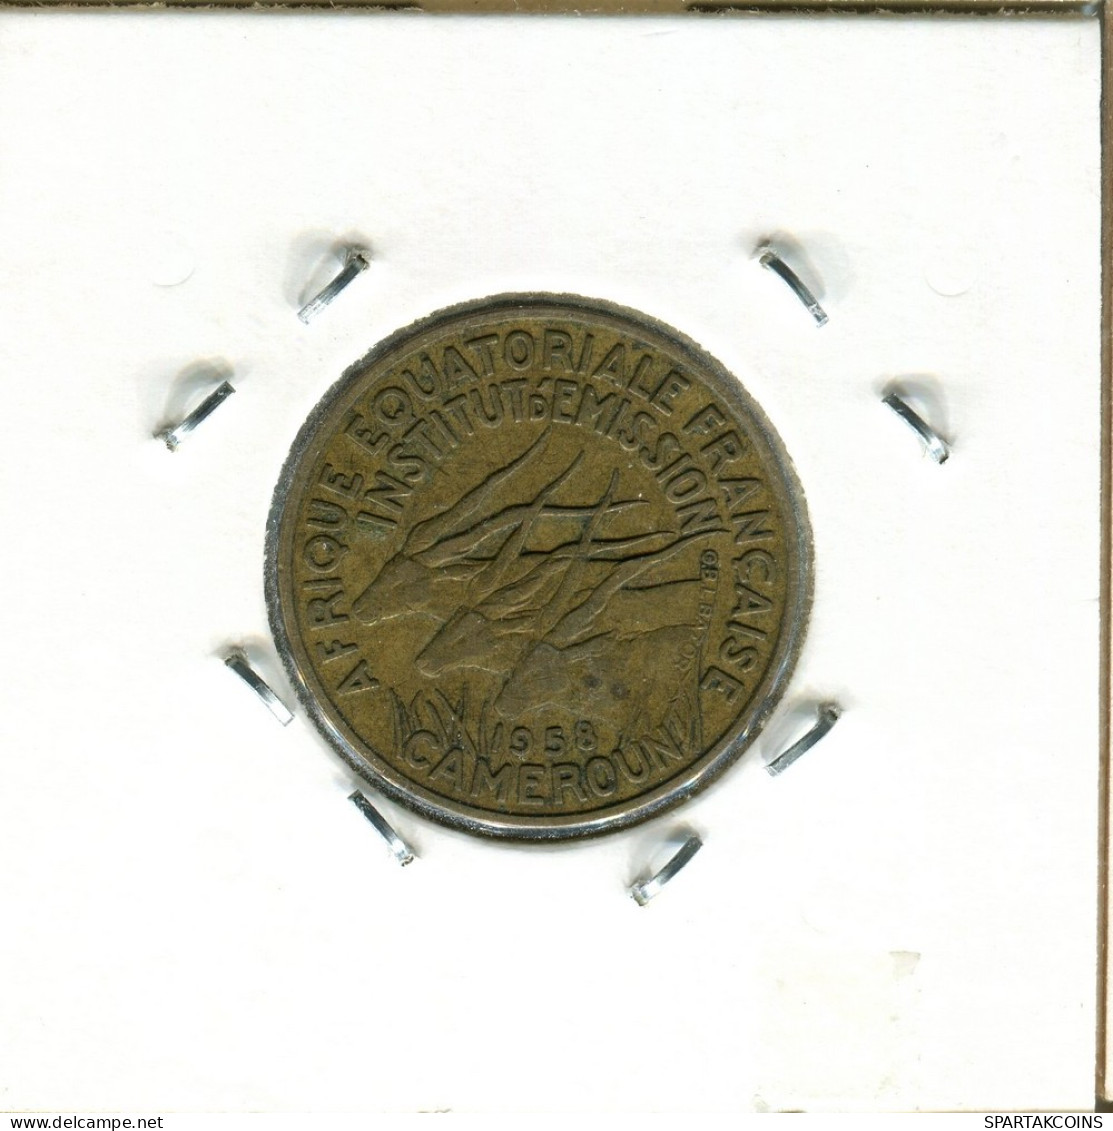 10 FRANCS 1958 CAMERÚN CAMEROON Moneda #AS324.E - Kamerun